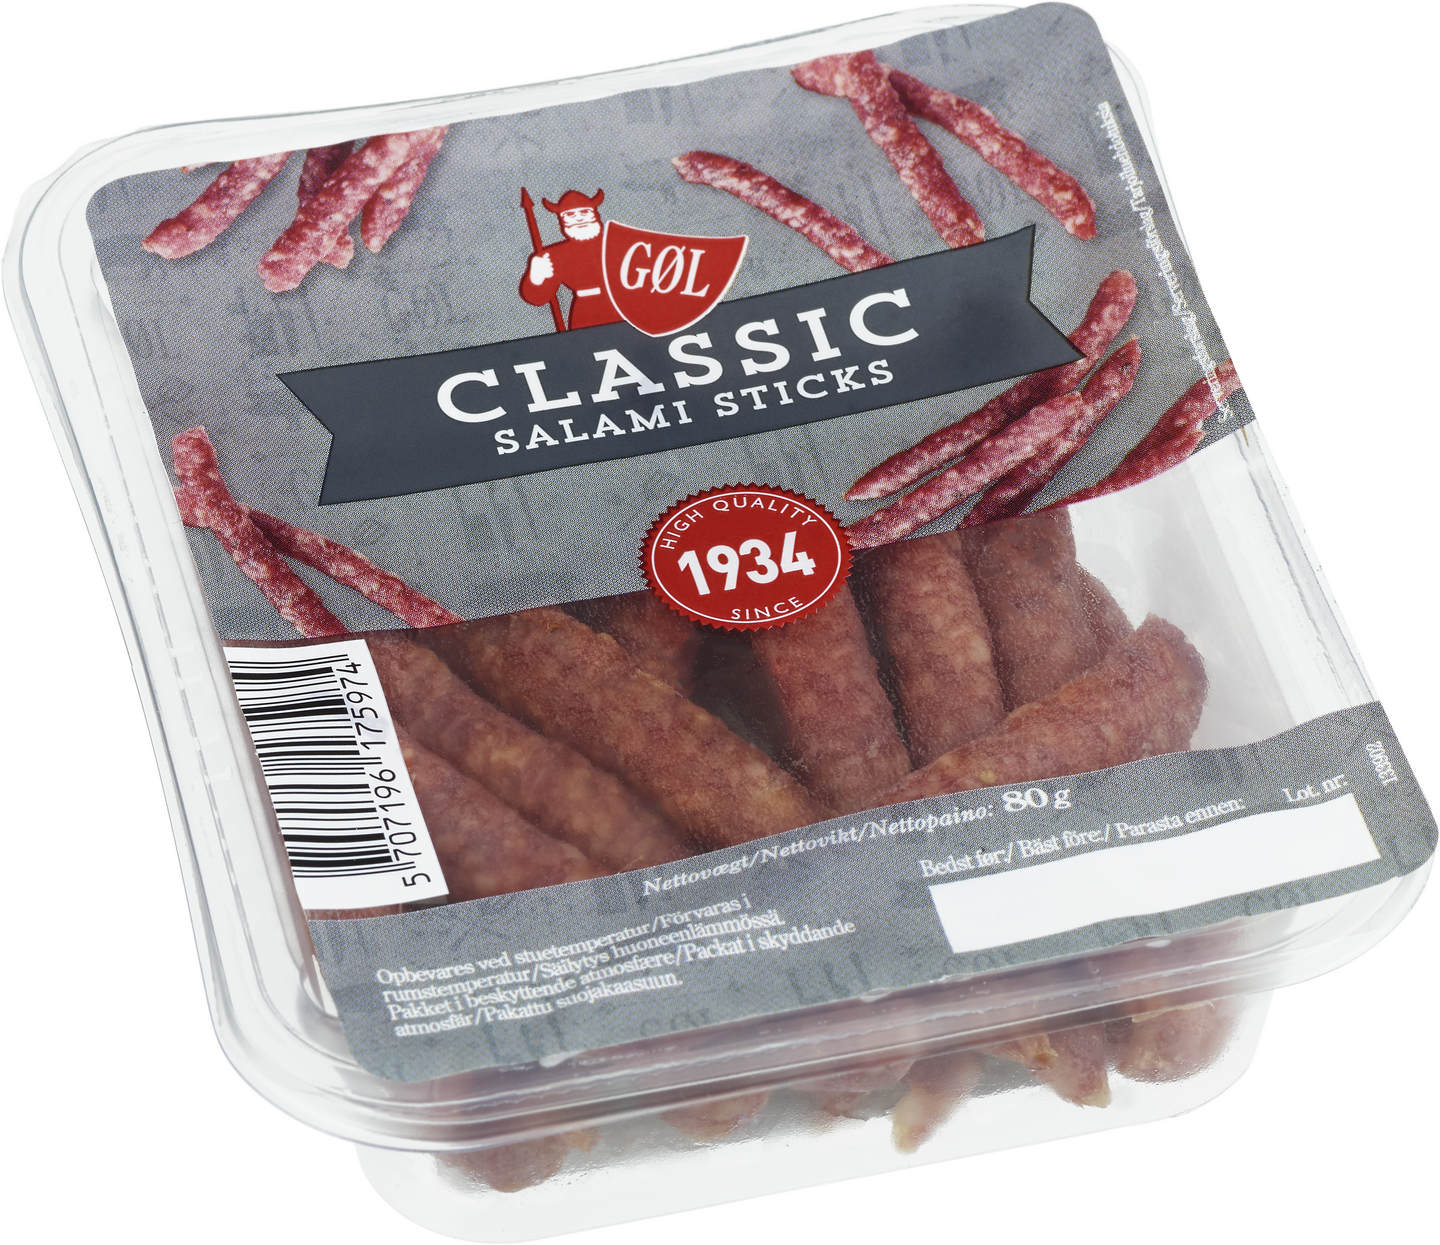 Gøl Klassisk salami sticks 80g